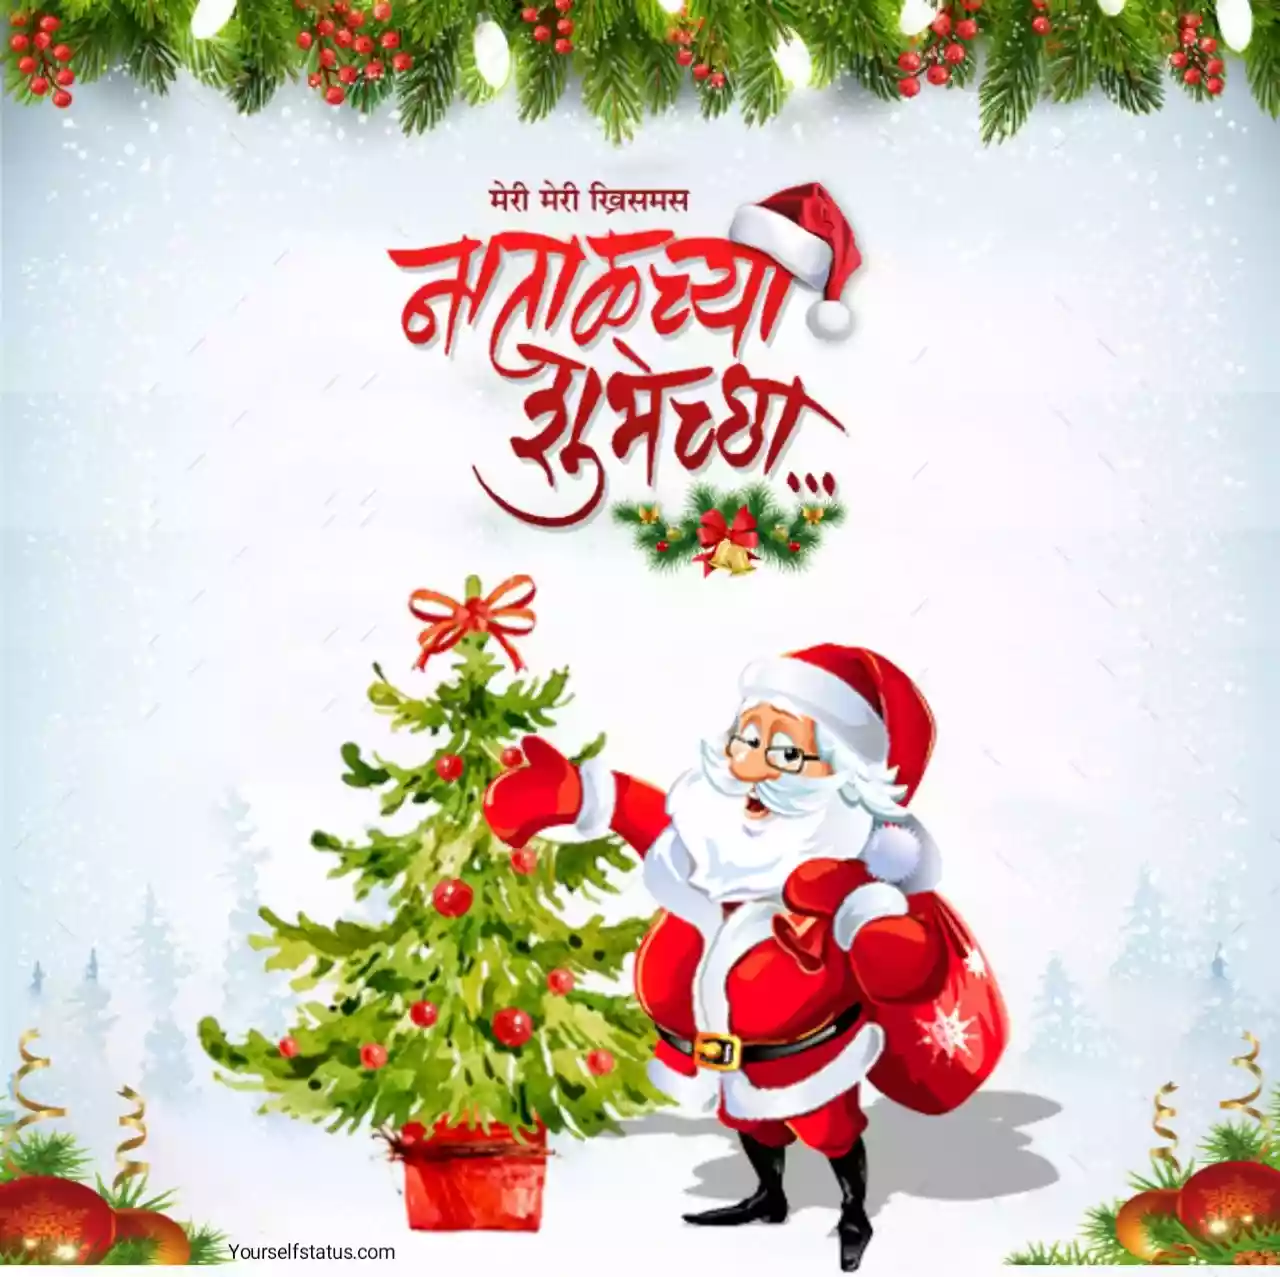 Christmas wishes images in marathi